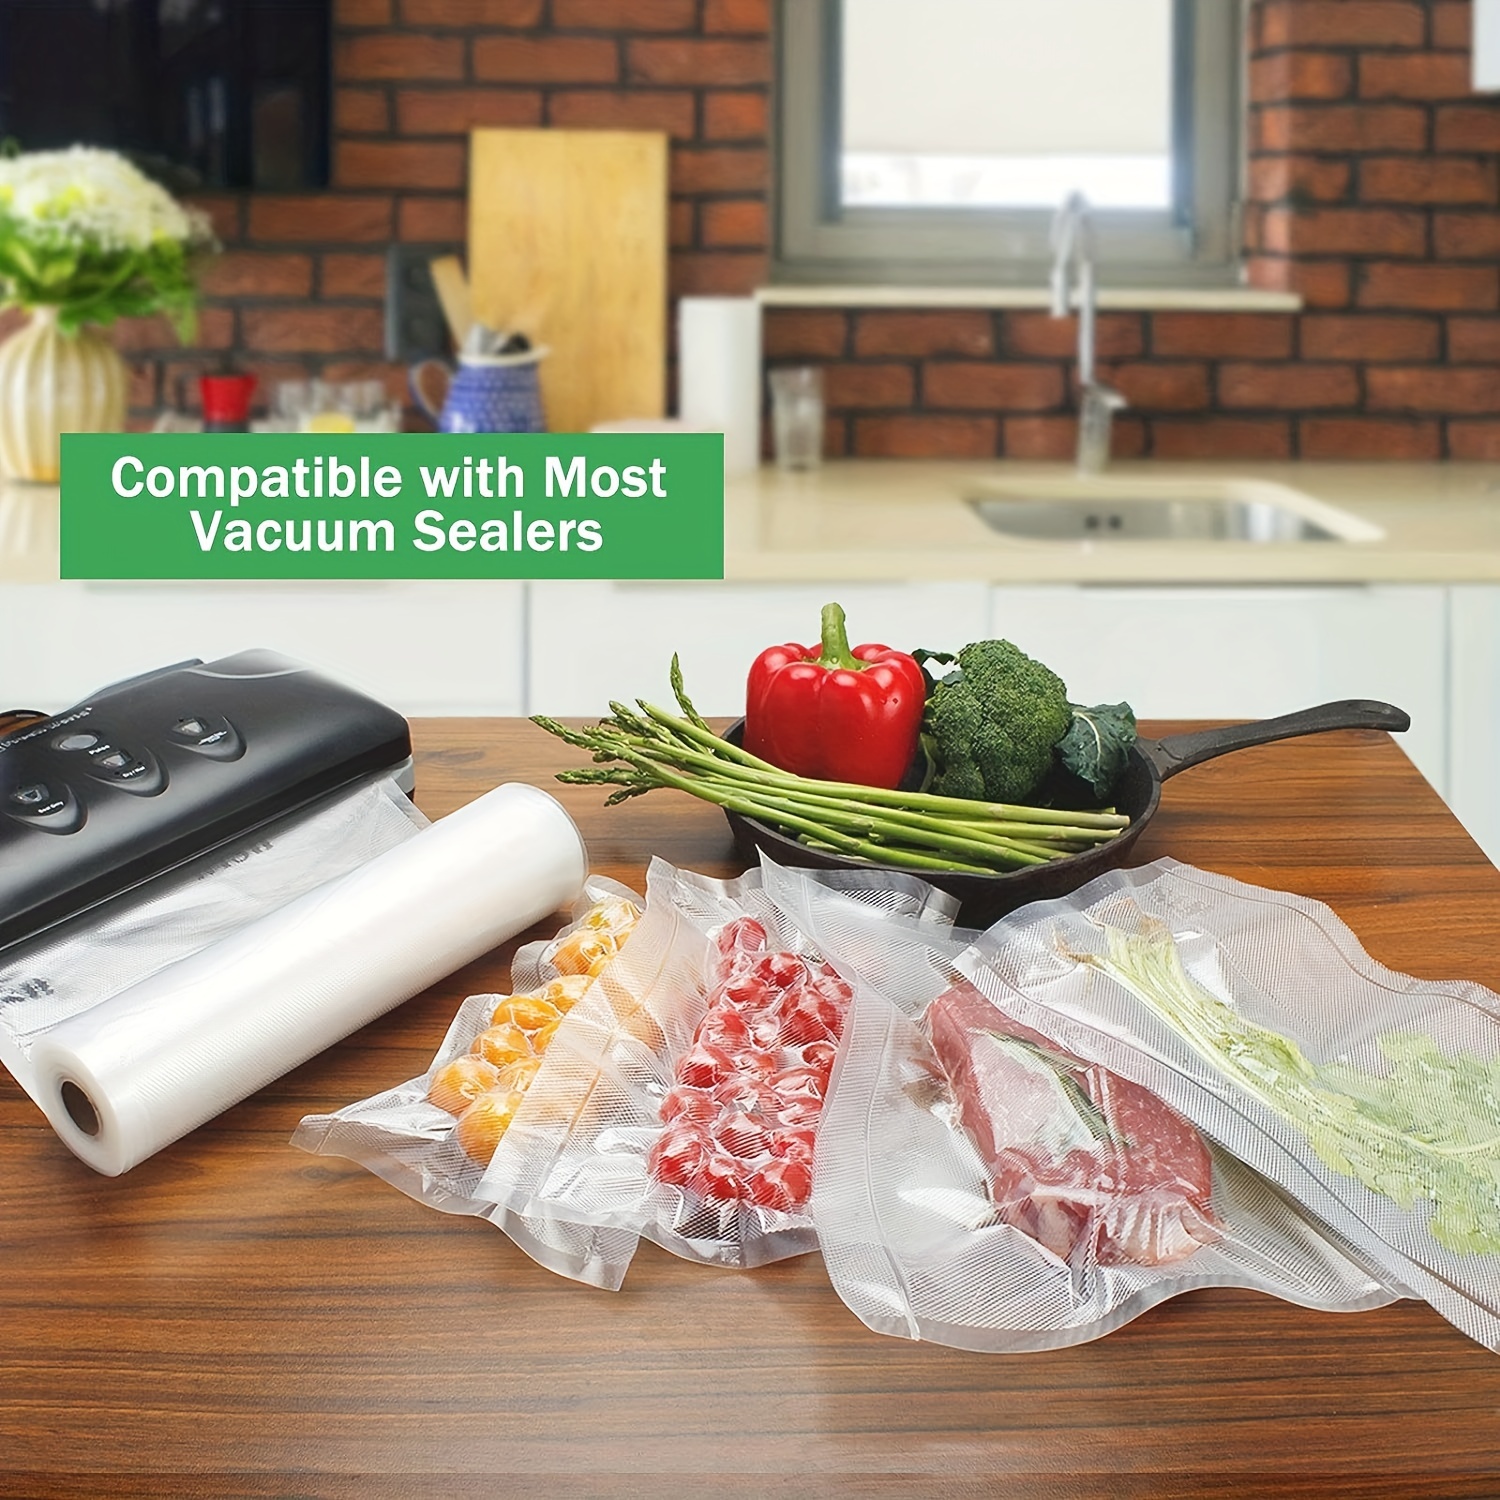 

3rolls, Vacuum Embossed Bags That Meet Food Requirements